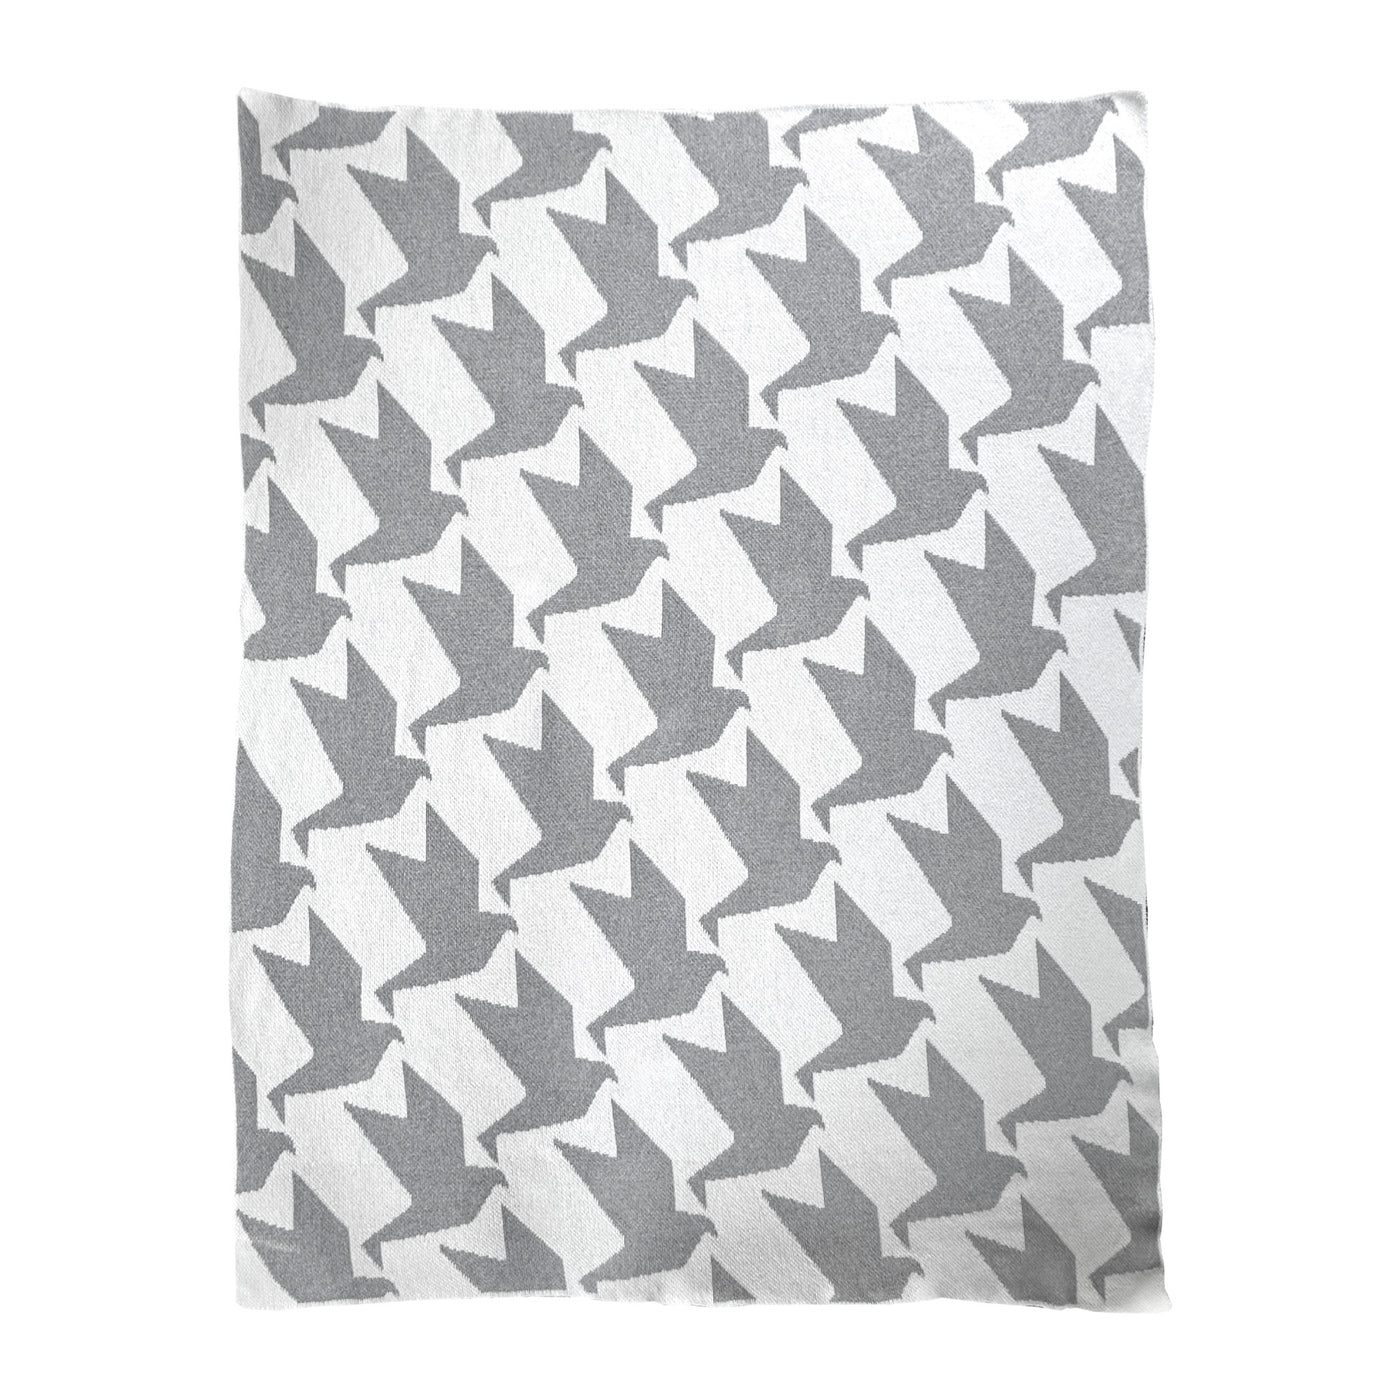 Origami Pattern Bird Throw Blanket